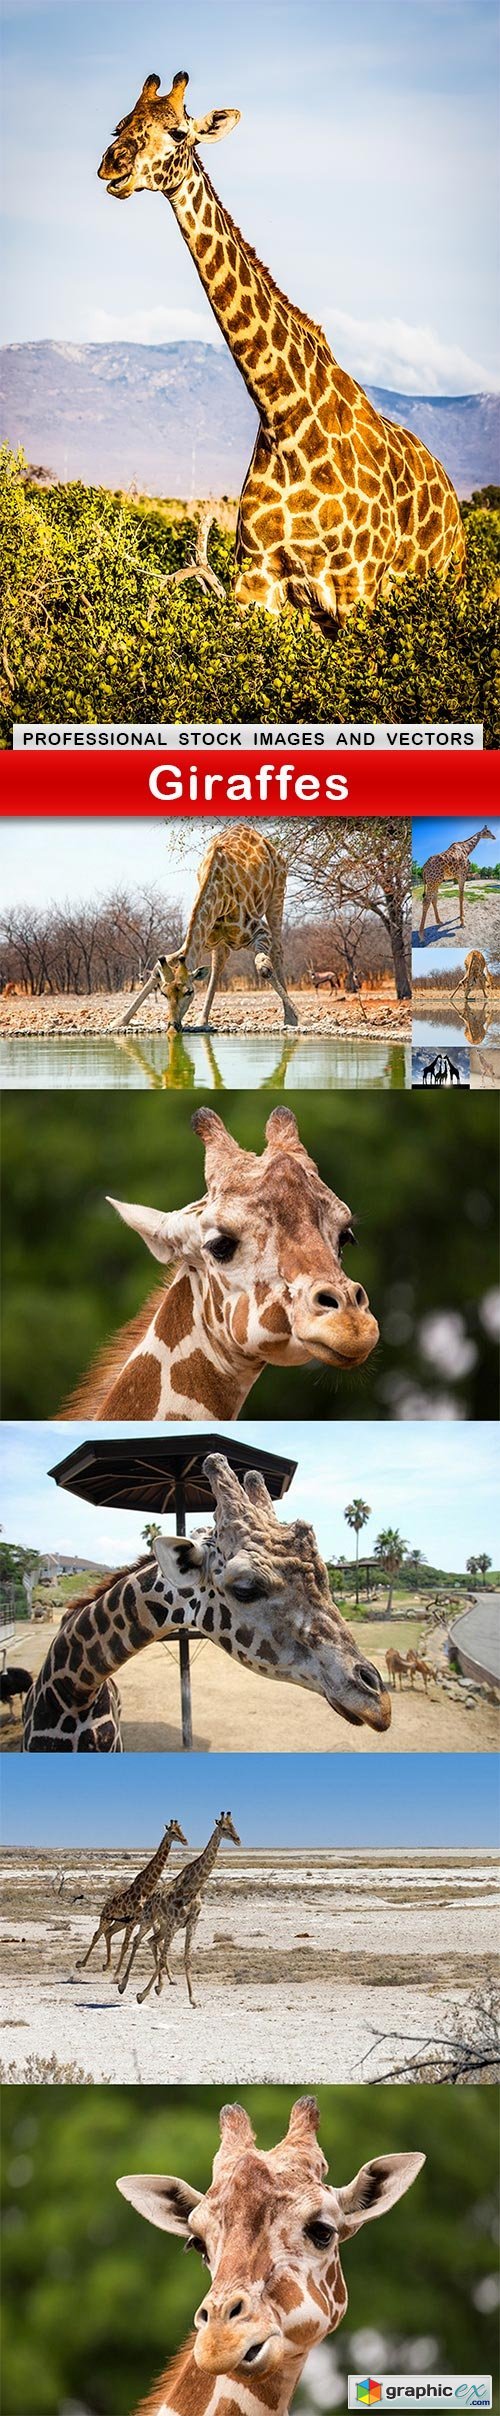 Giraffes - 10 UHQ JPEG